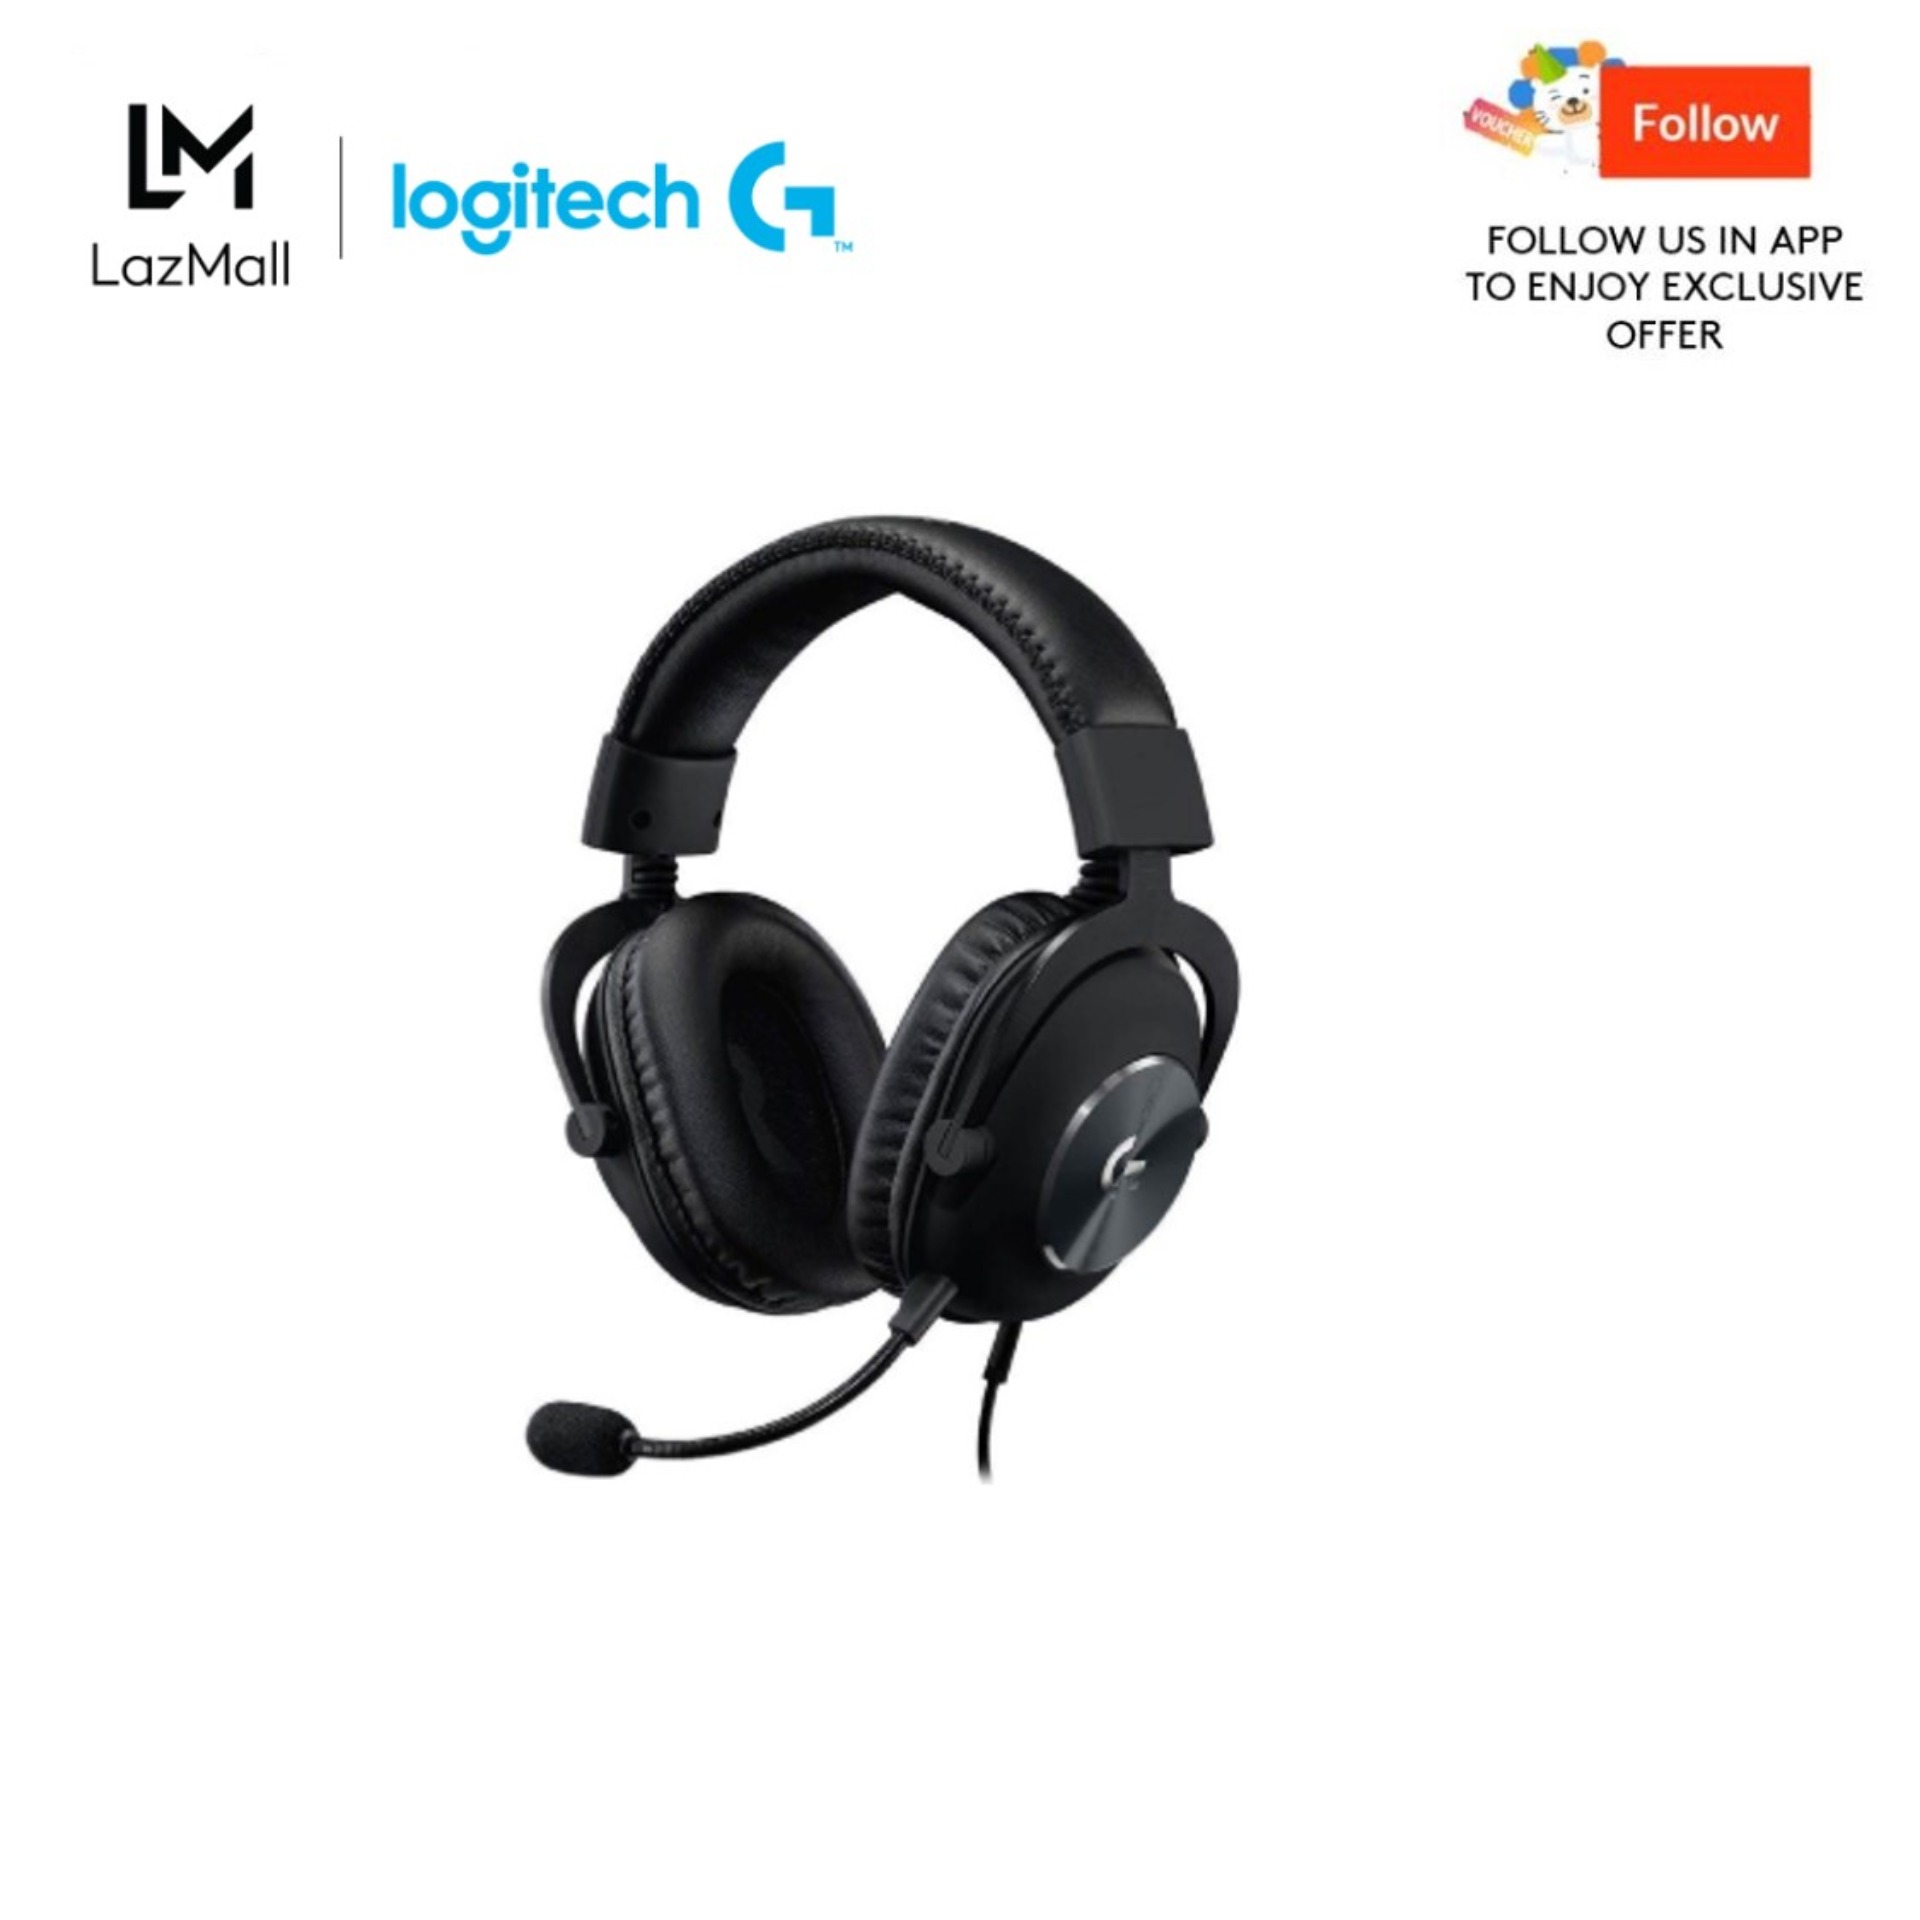 Logitech g pro headset